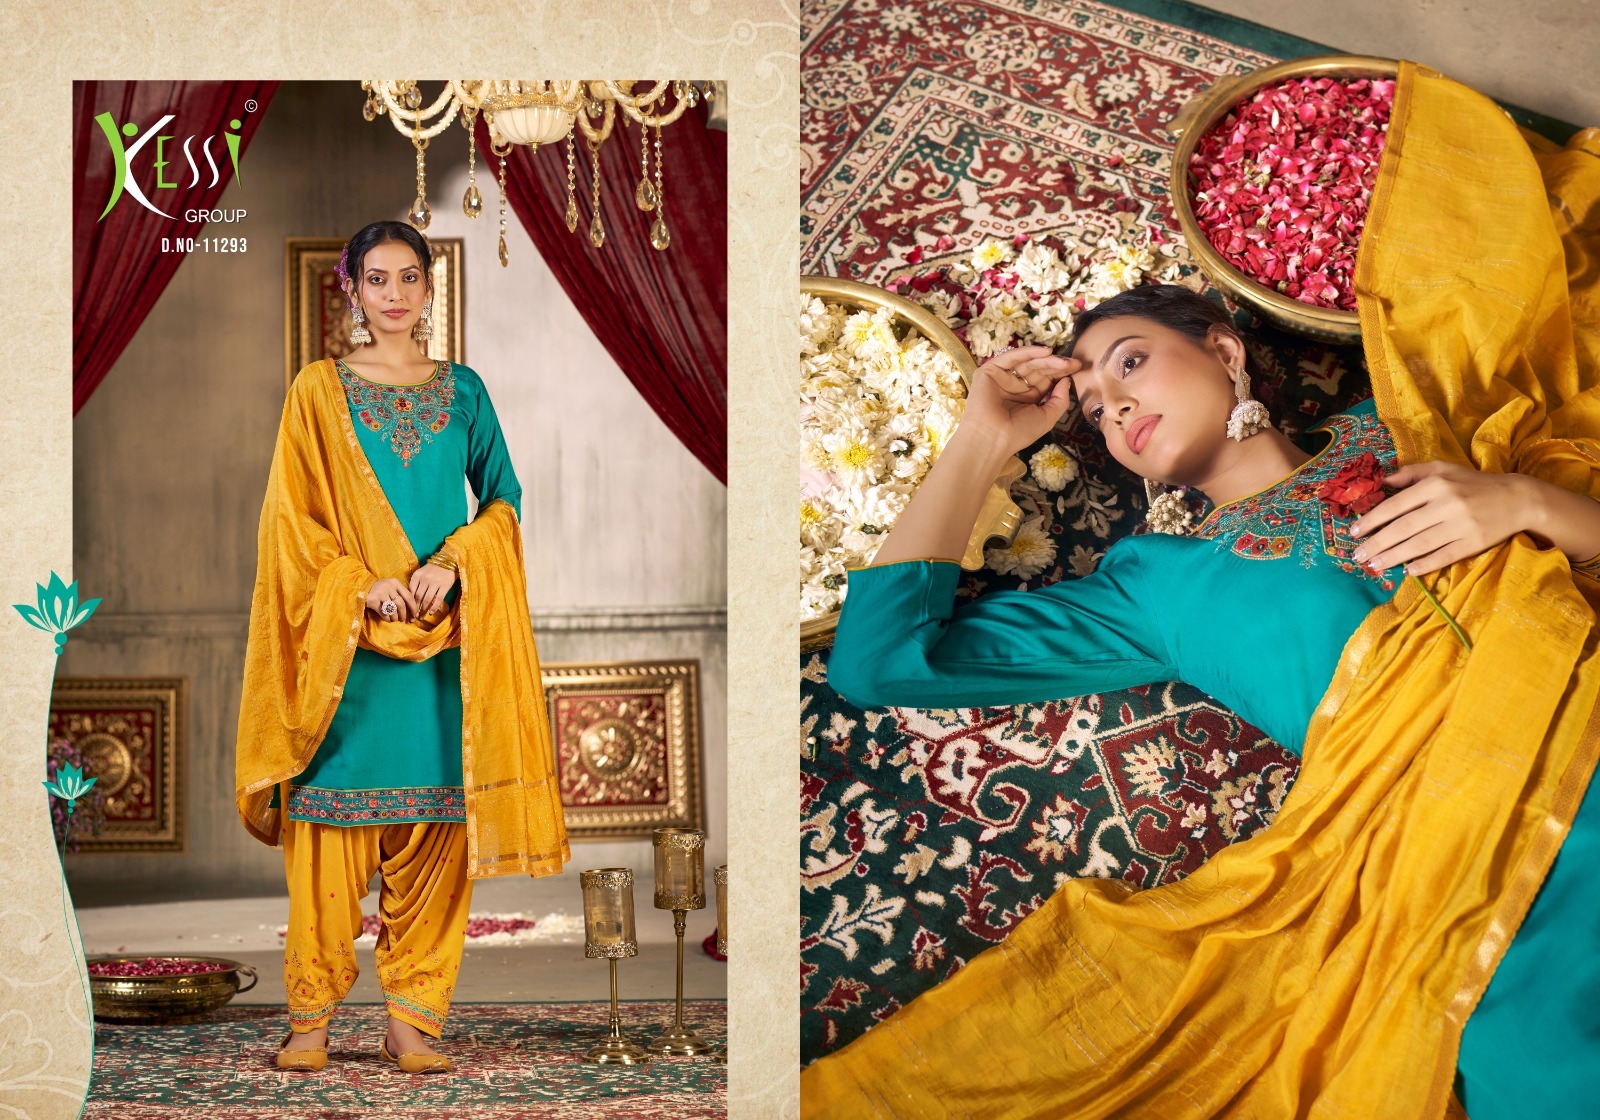 kessi patiala house vol 94 muslin innovative look salwar suit catalog